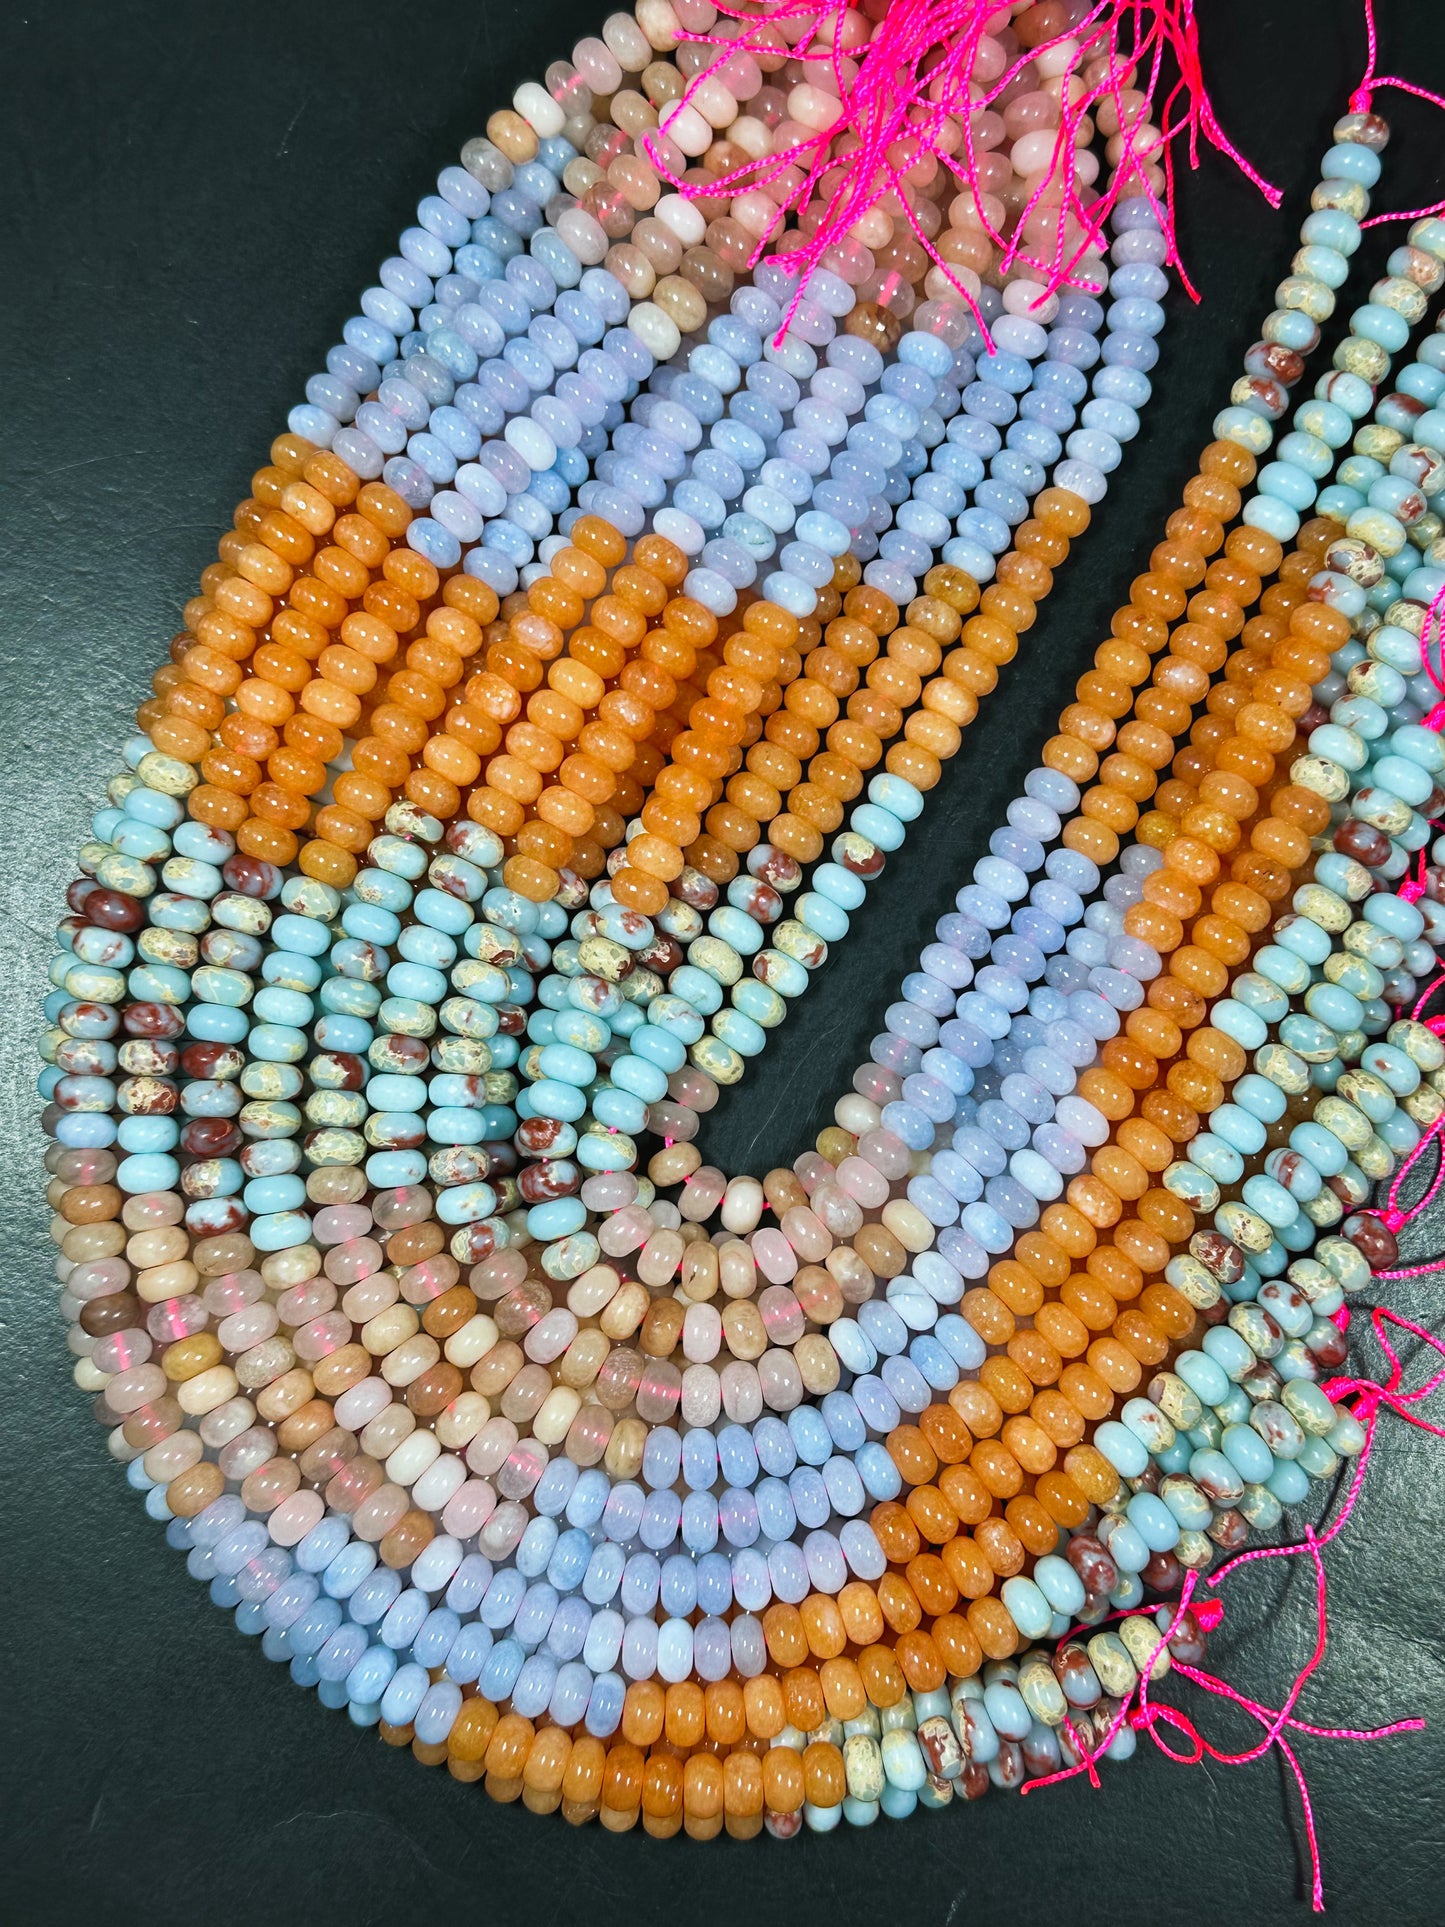 Natural Mixed Gemstone Beads 8x5mm Rondelle Shape, Beautiful Flower Agate Aquamarine Jade Imperial Jasper Gemstone Beads, Full Strand 15.5"